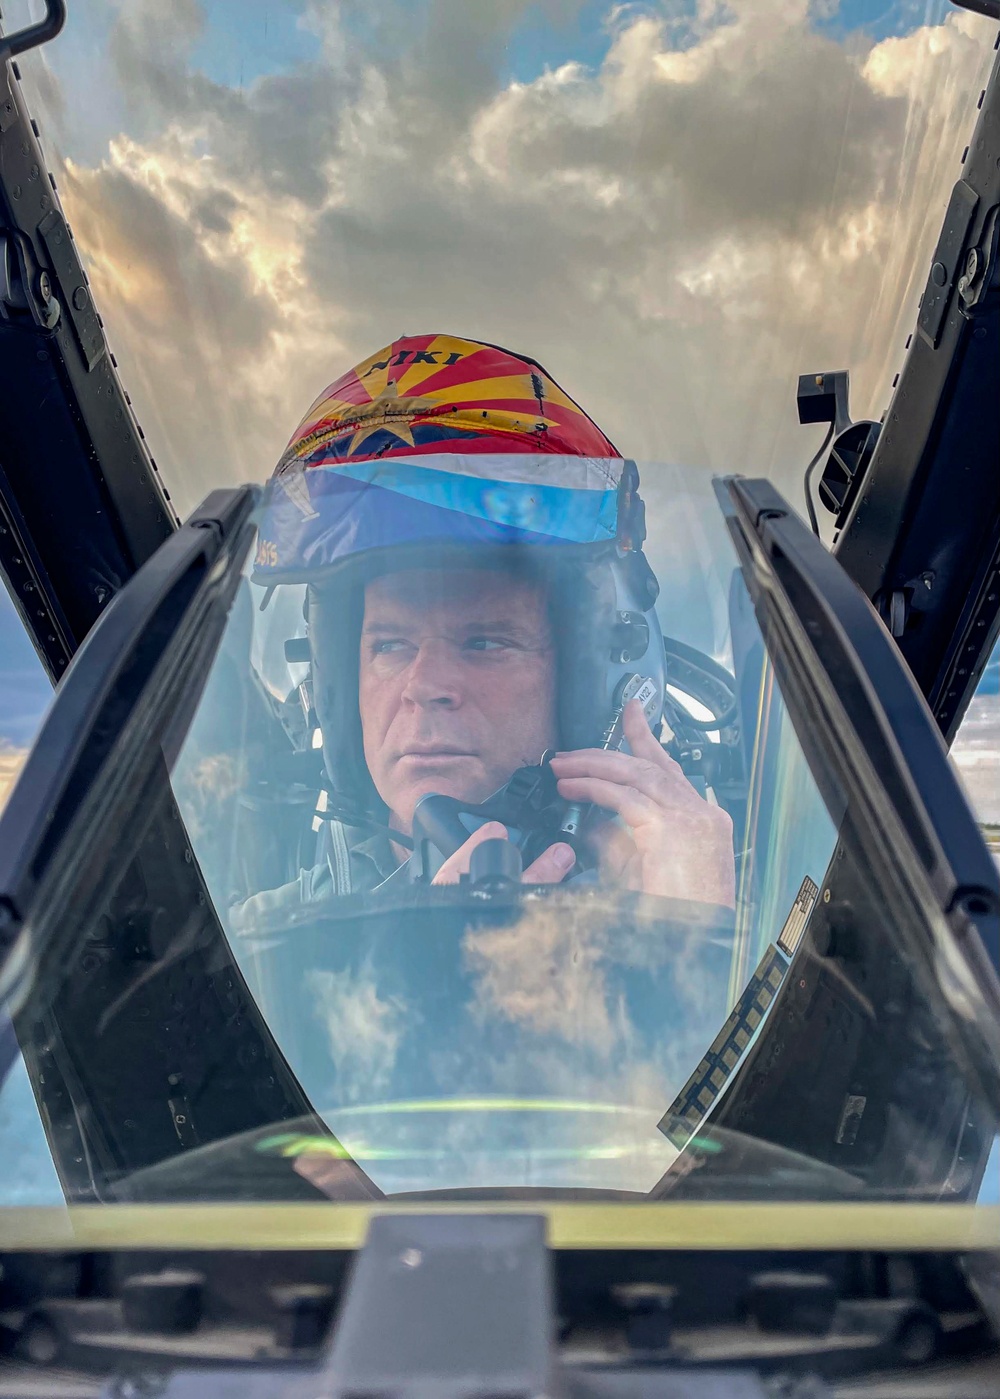 Farewell tour: Dutch finish overwater F-16 training above Florida coast